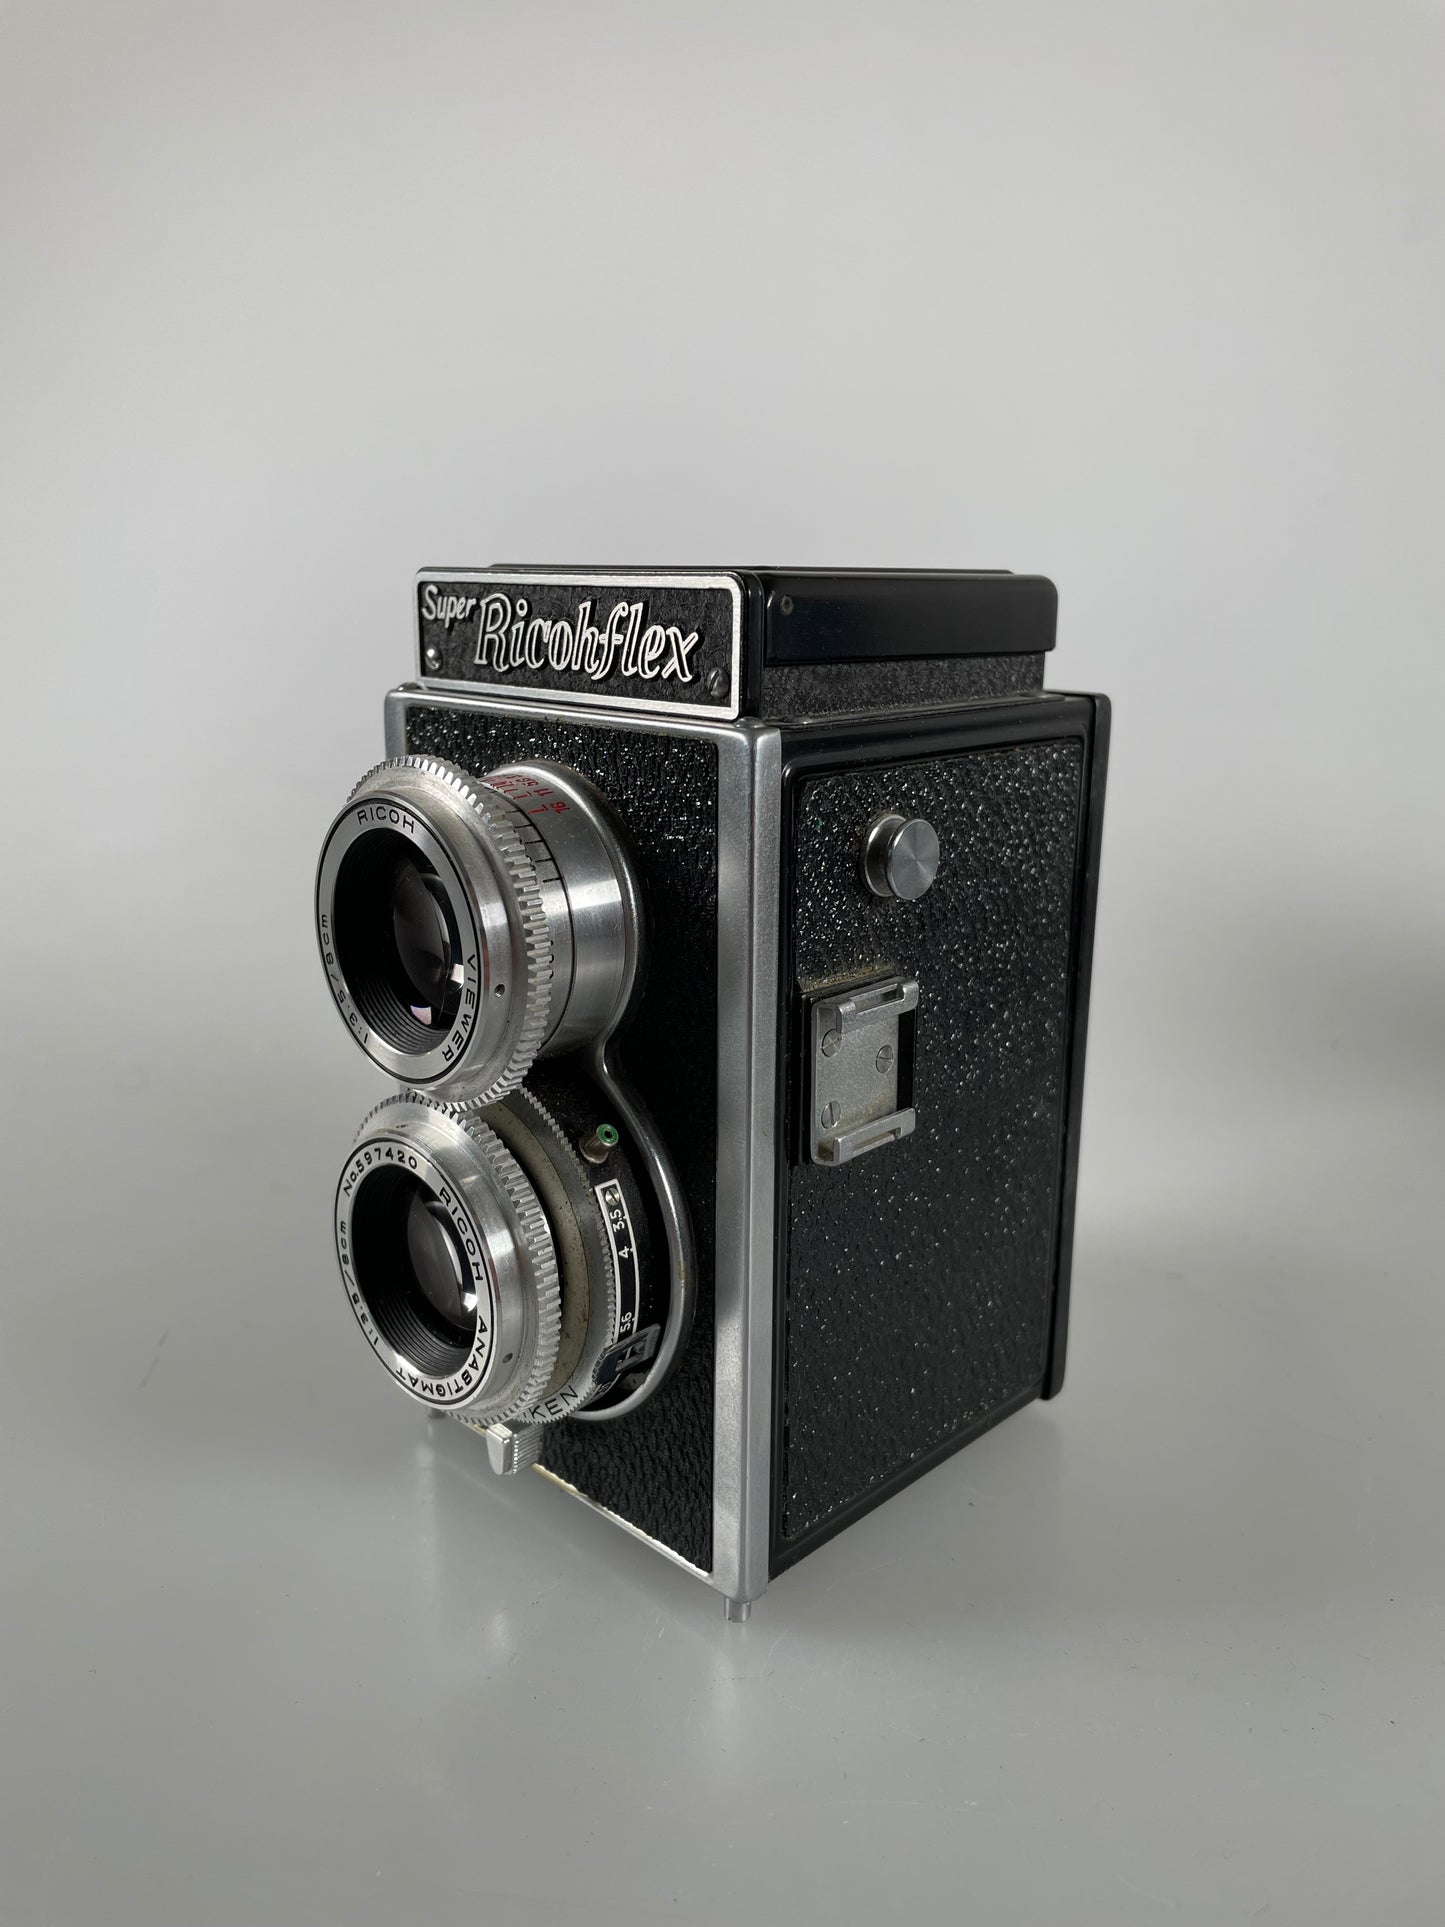 Ricoh Super Ricohflex 6x6 120 Roll Film Camera with 8cm f3.5 Lens